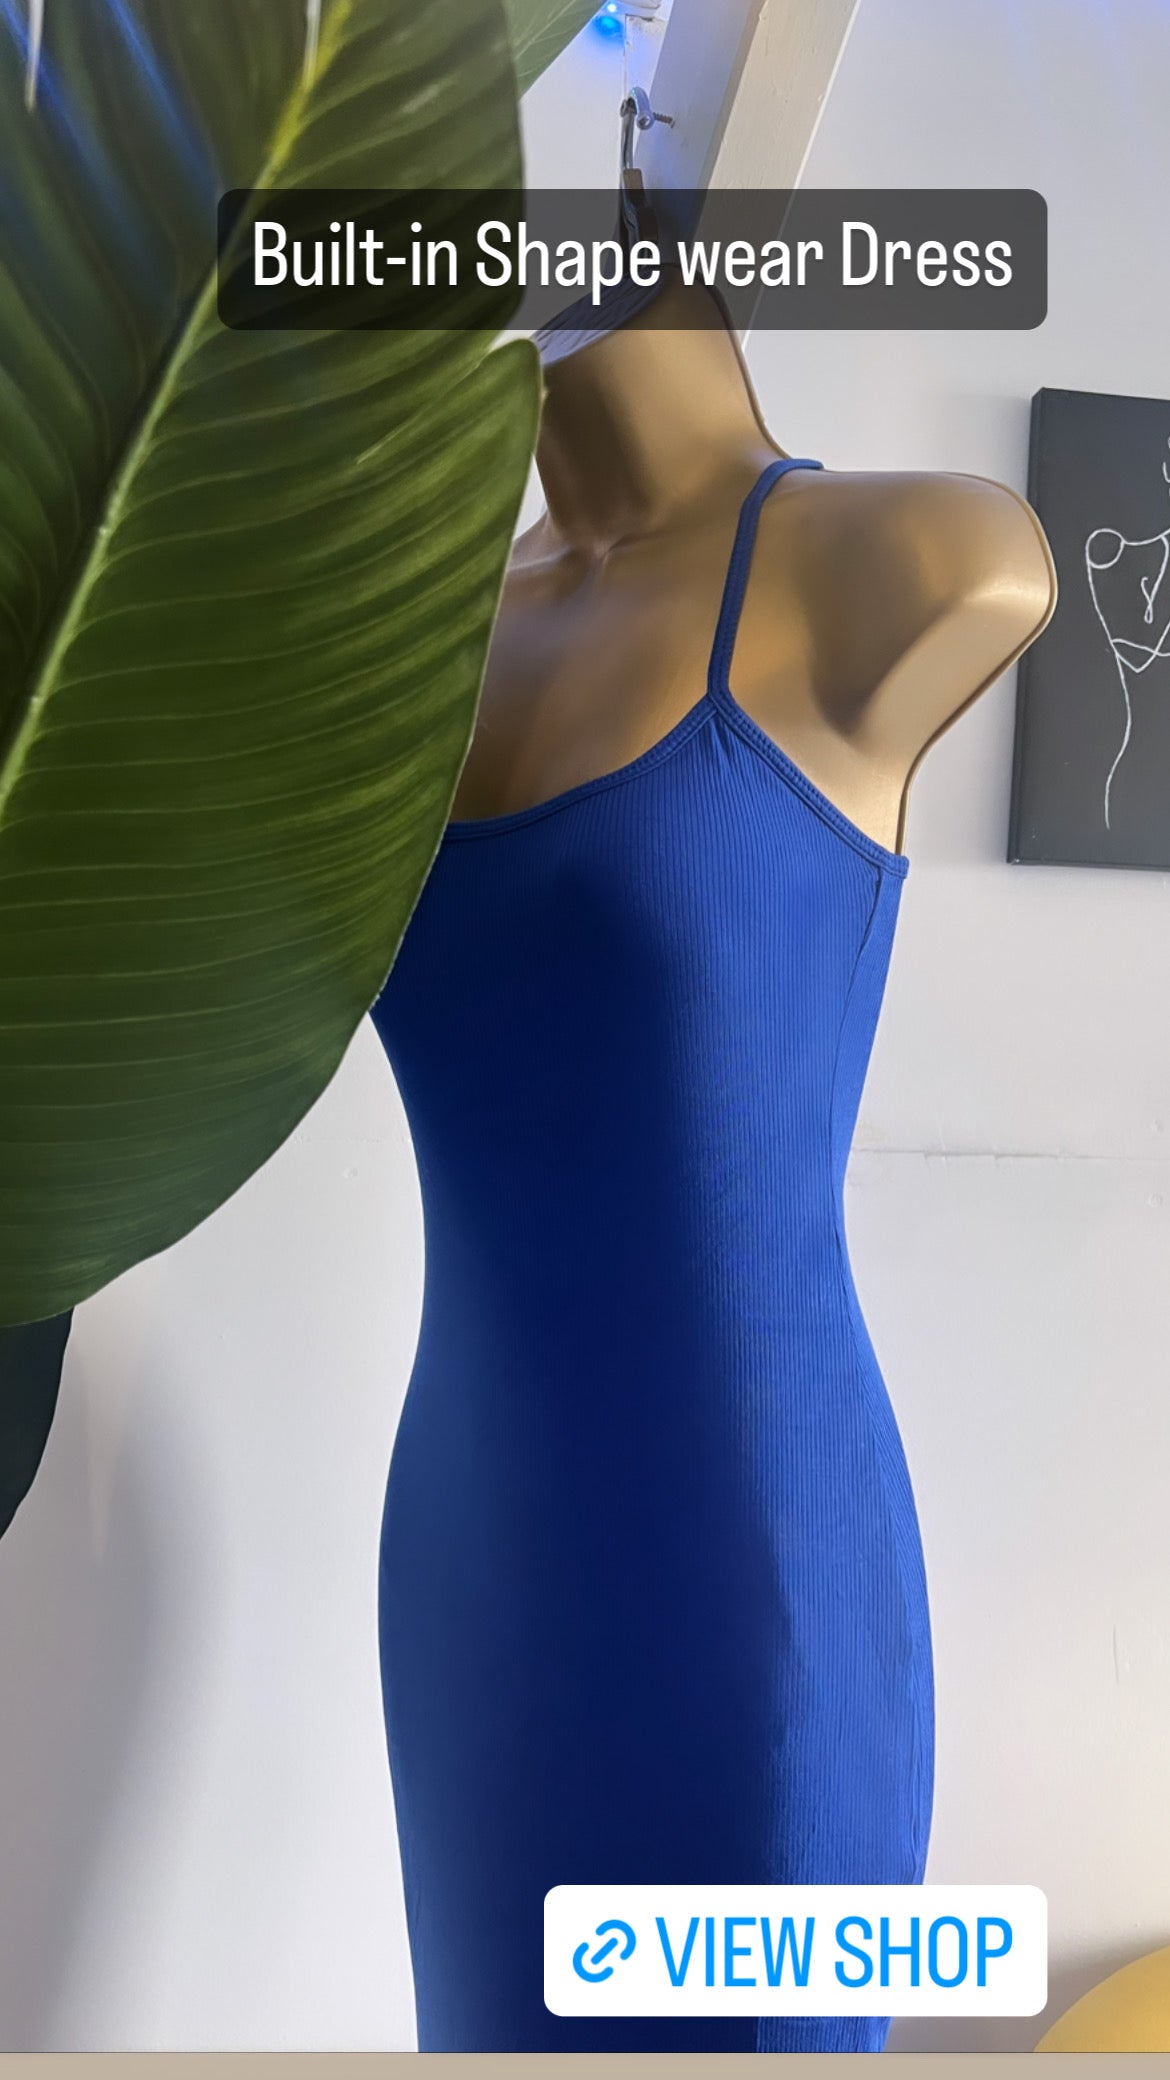 Built-in Shapewear Tummy Control Butt Lifting Shaper Dress Shaping